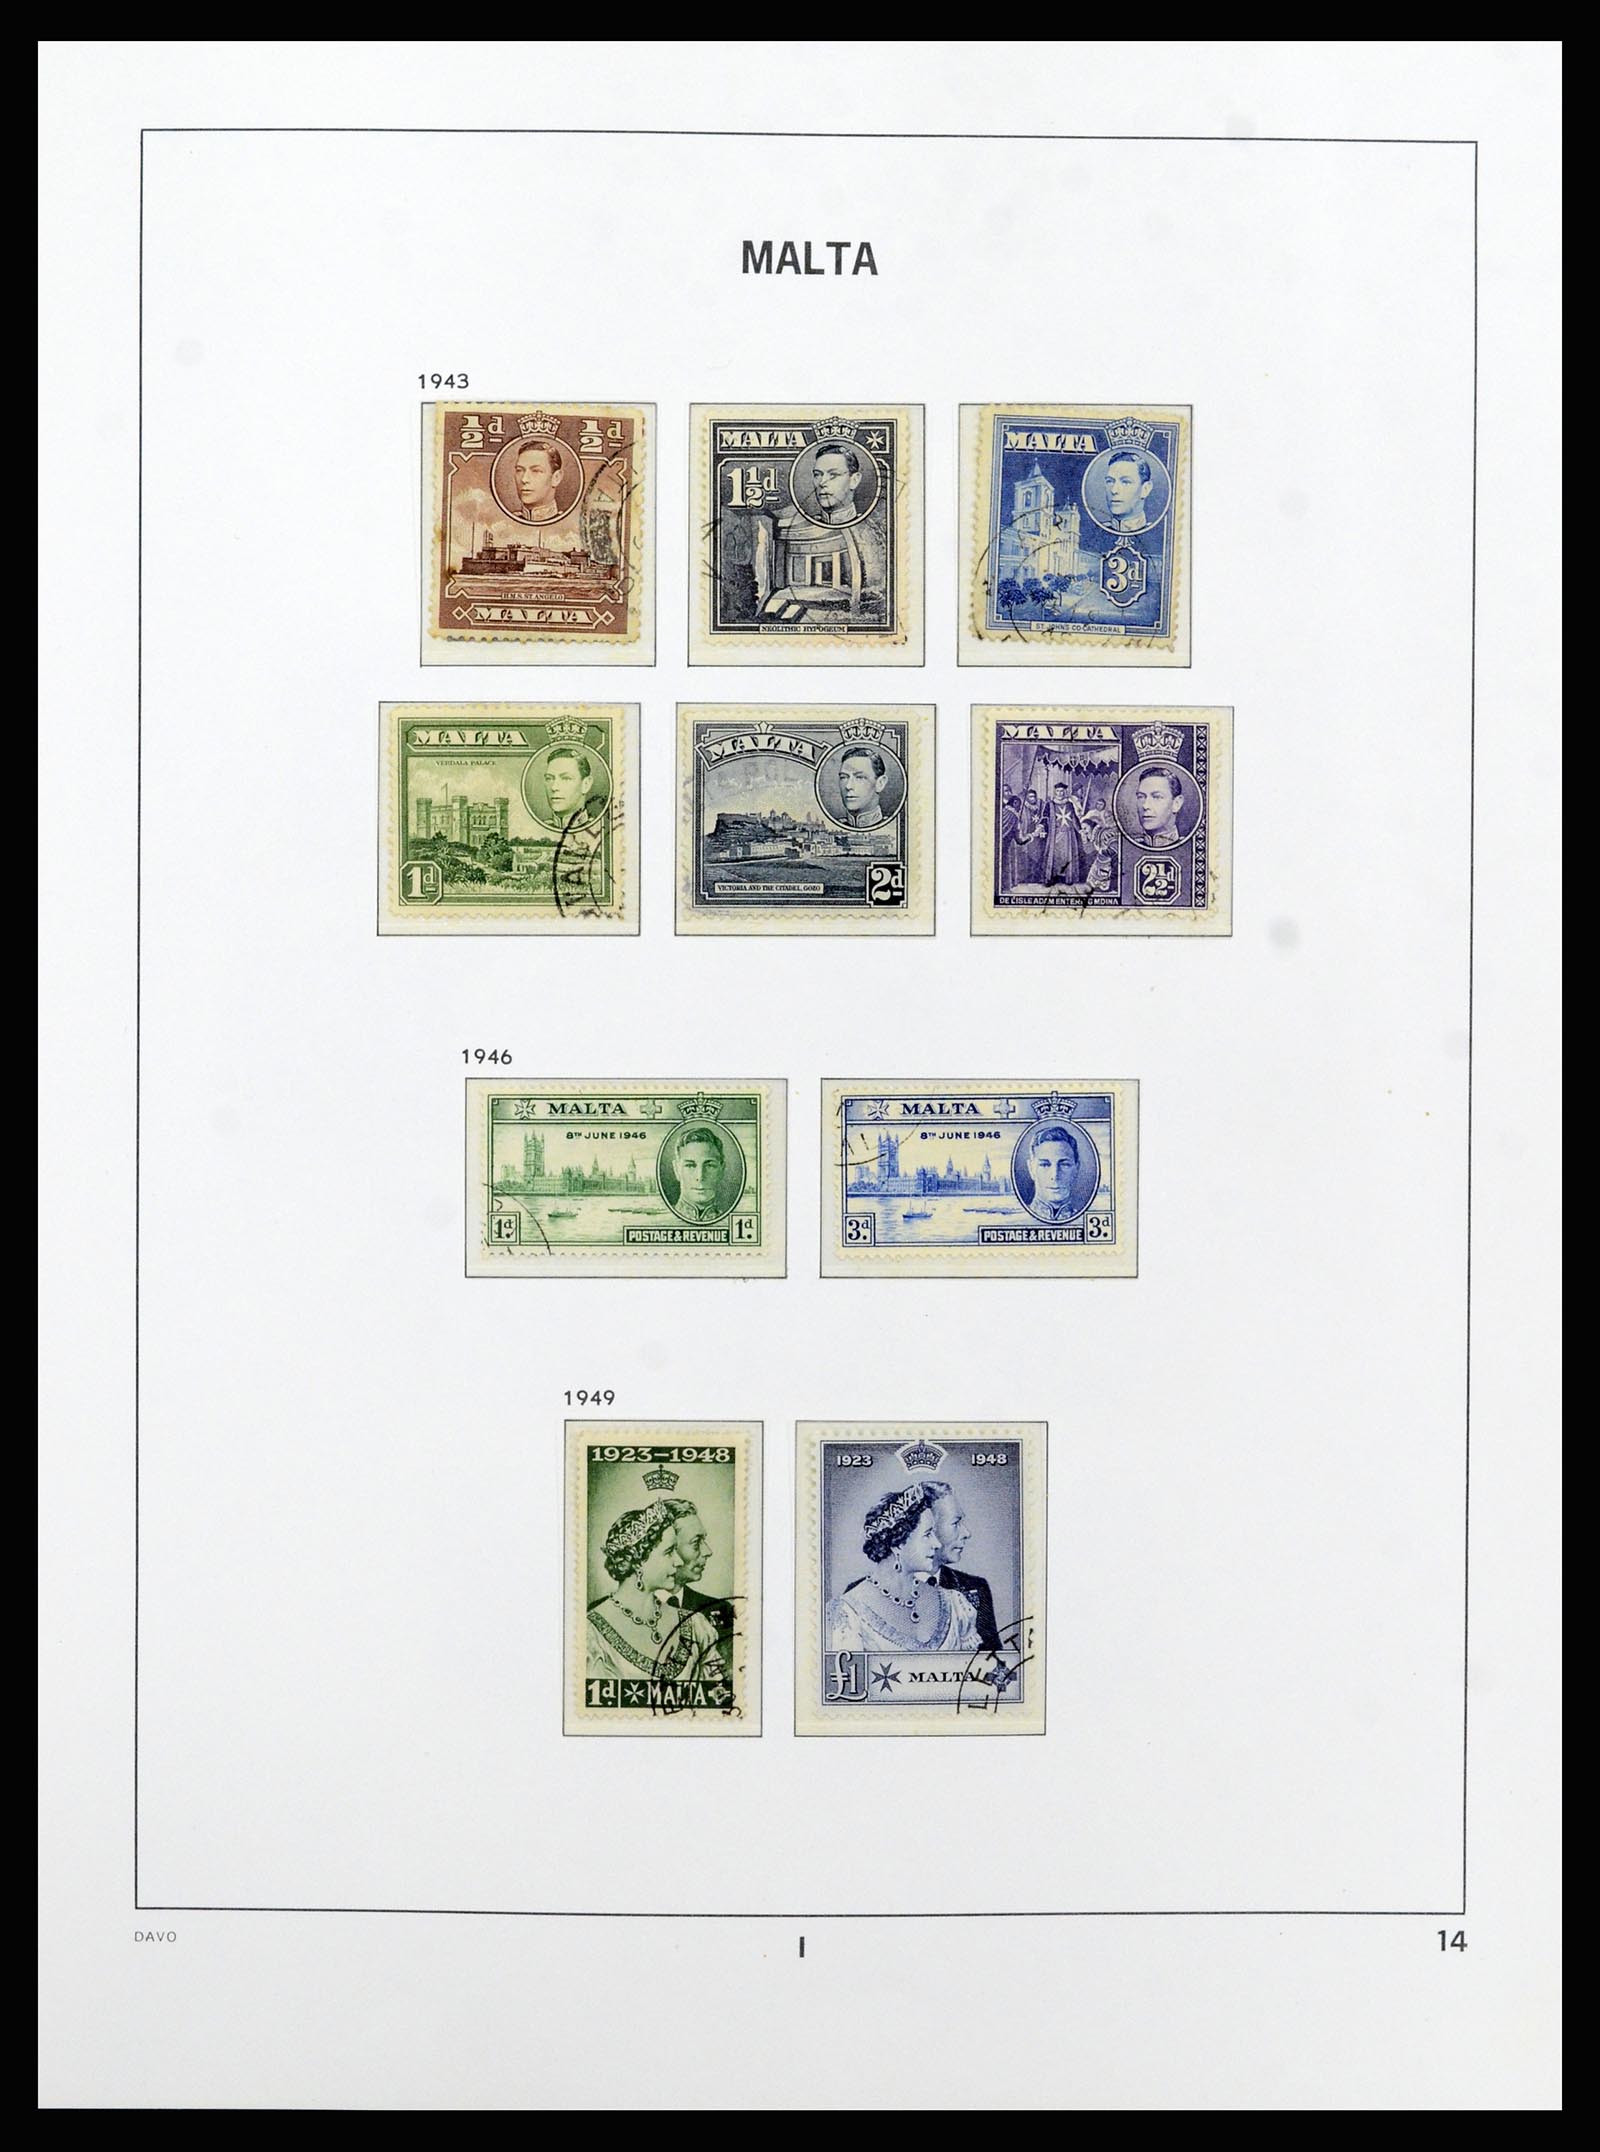 37212 014 - Stamp collection 37212 Malta 1863-1989.